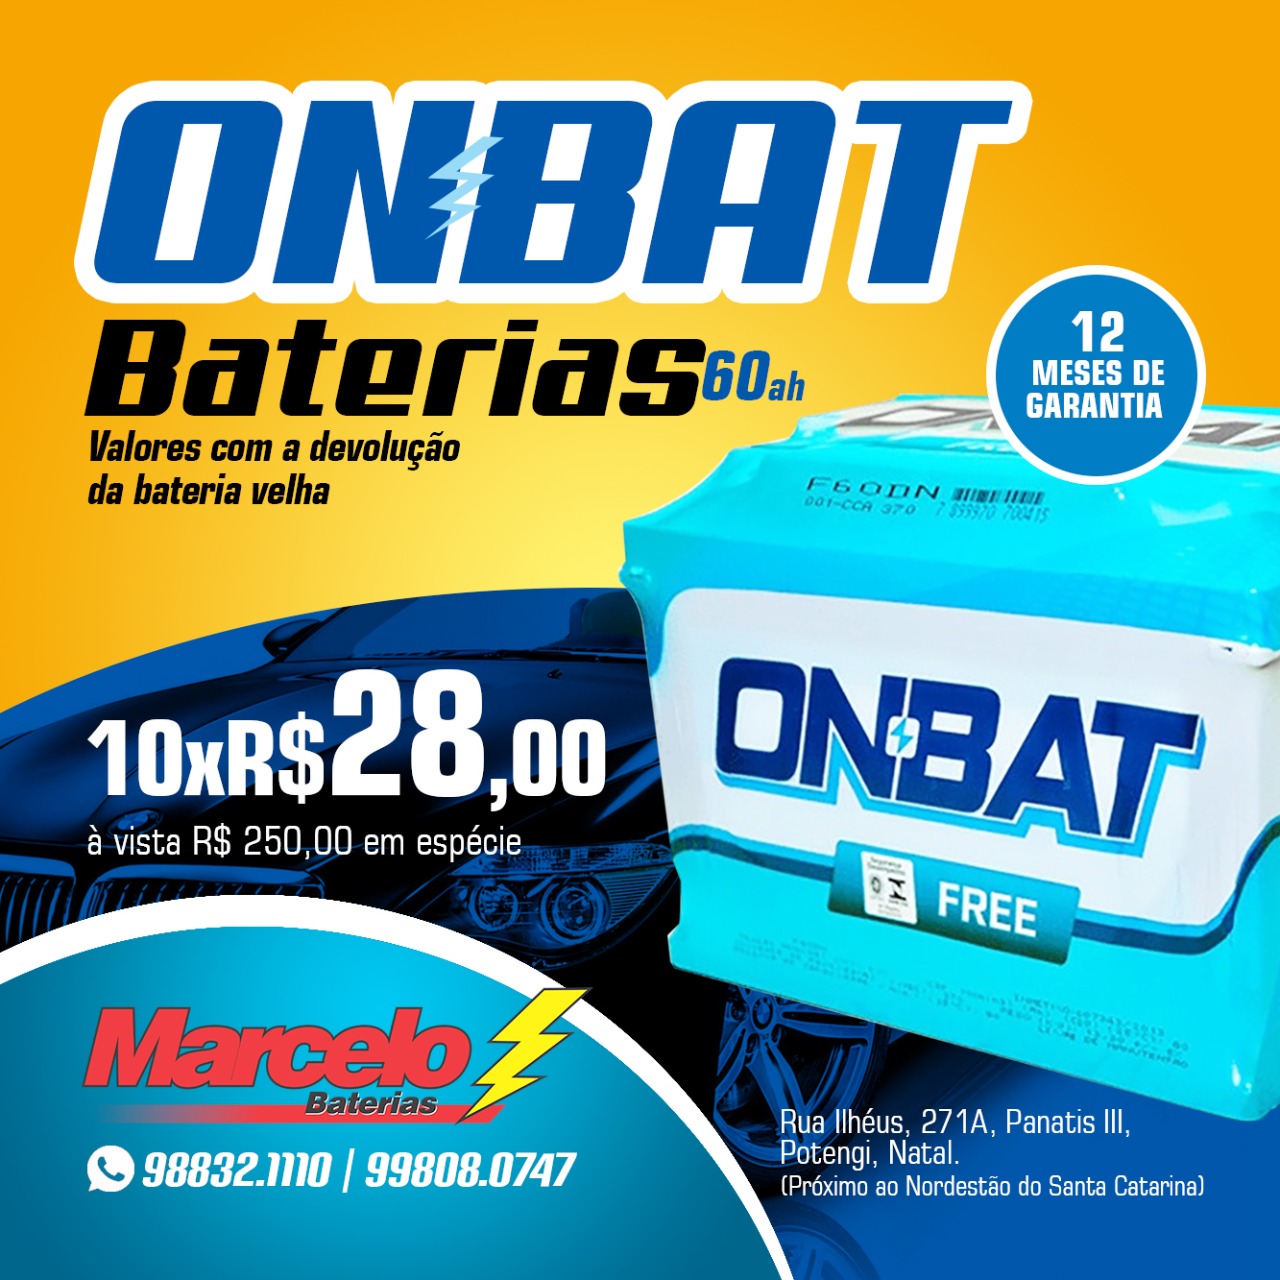 Promoção: Bateria Onbat 60ah 